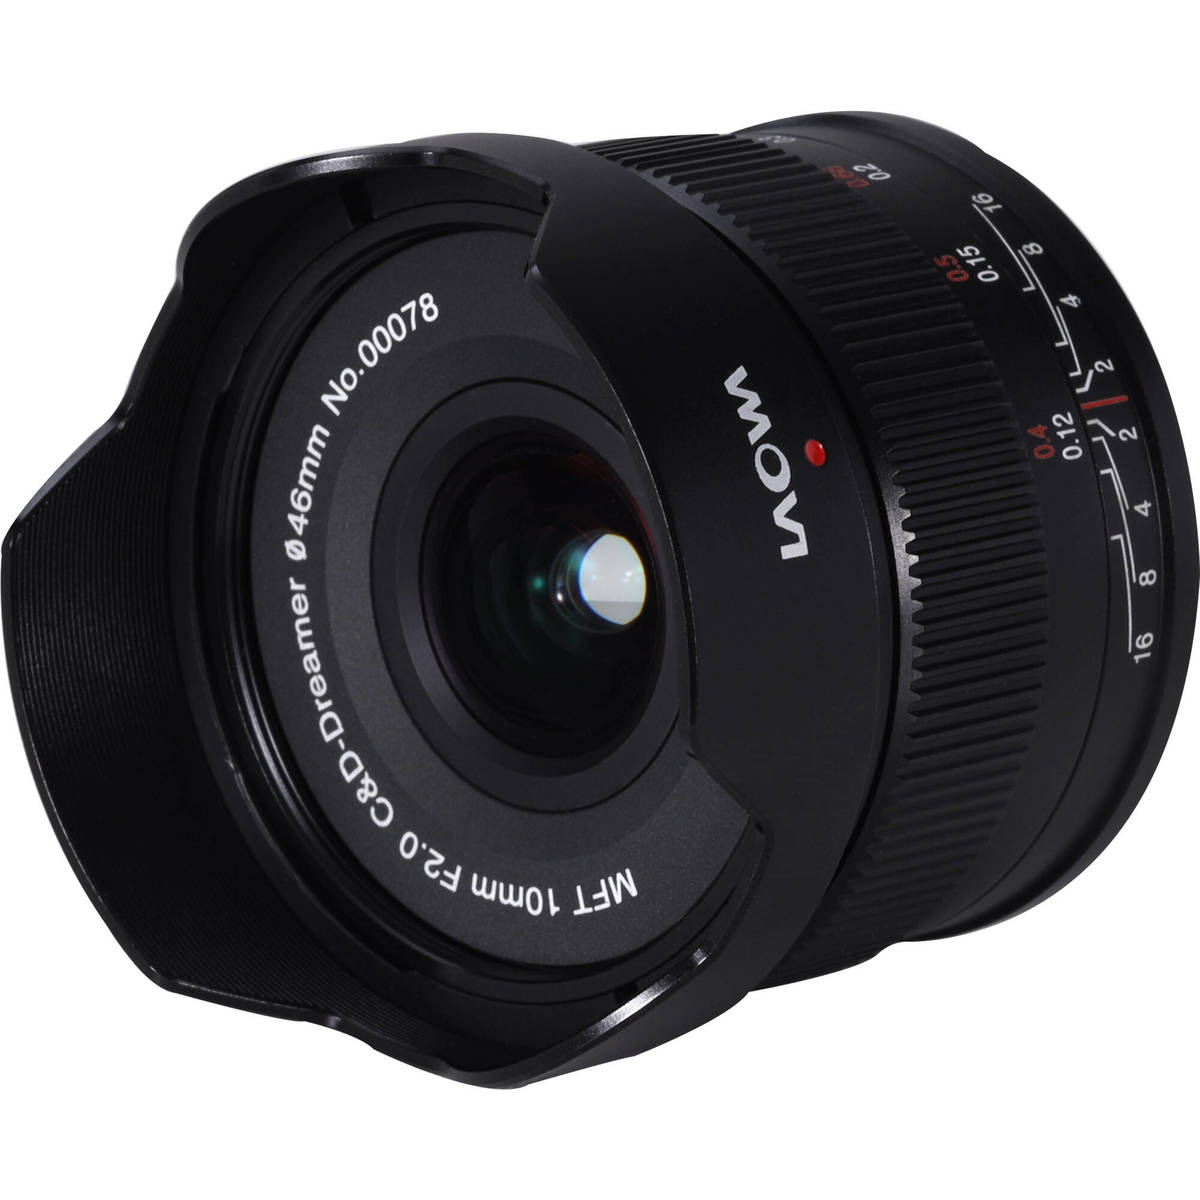 6. Laowa Lens 10mm f/2.8 Zero-D (MFT)